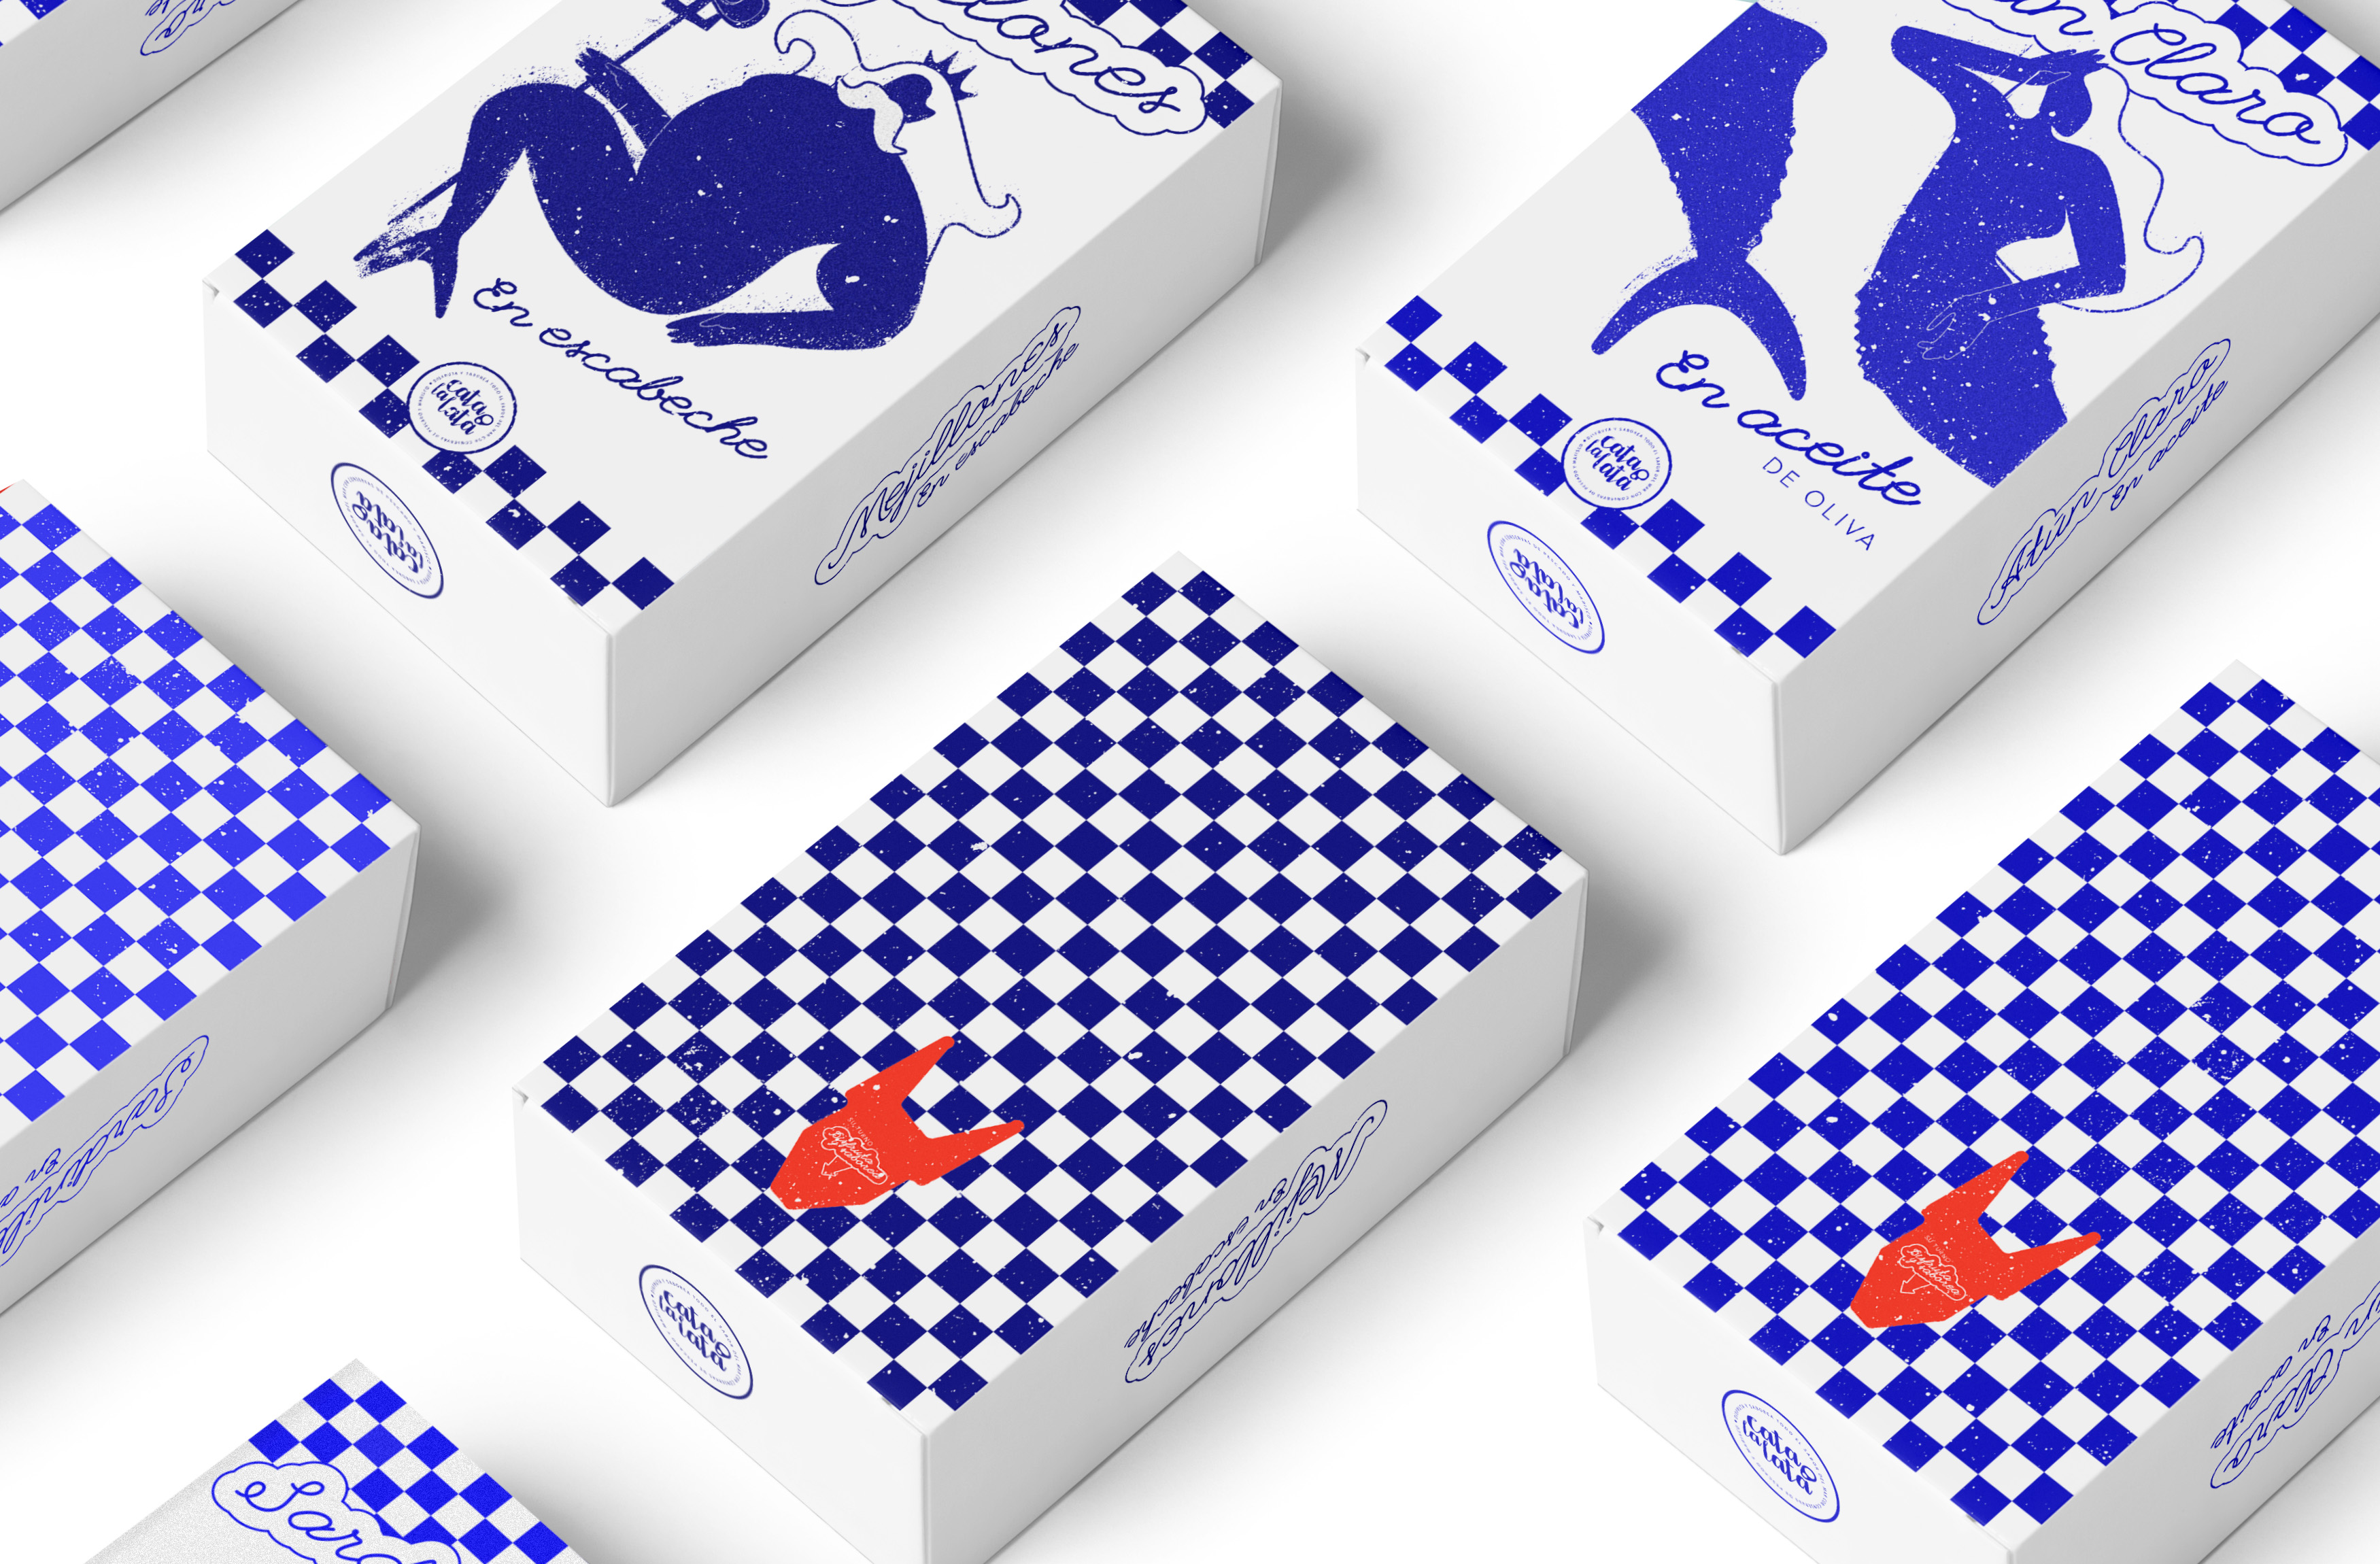 'Disfruta tu turno' packaging para Cata la Lata by Jimena - Creative Work - $i